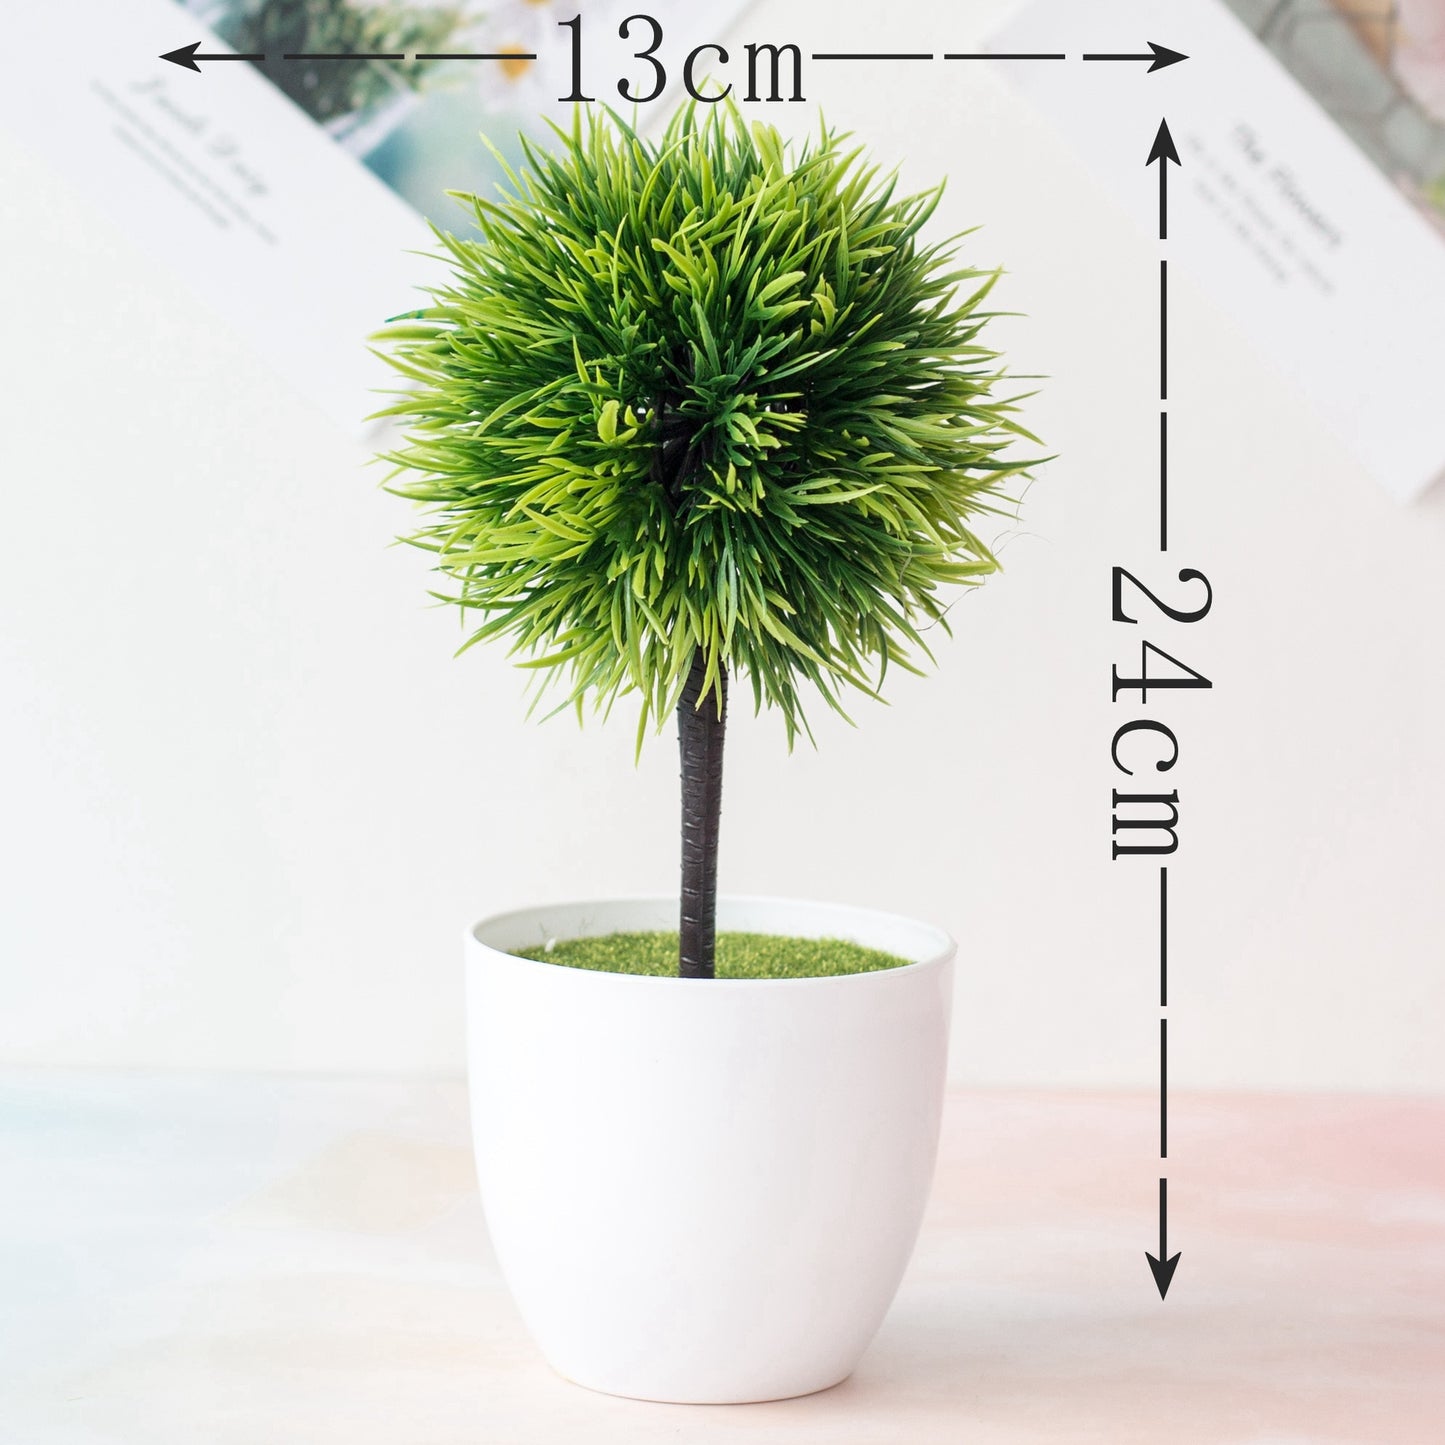 Green Artificial Pine Tree Persian Grass Plants Bonsai